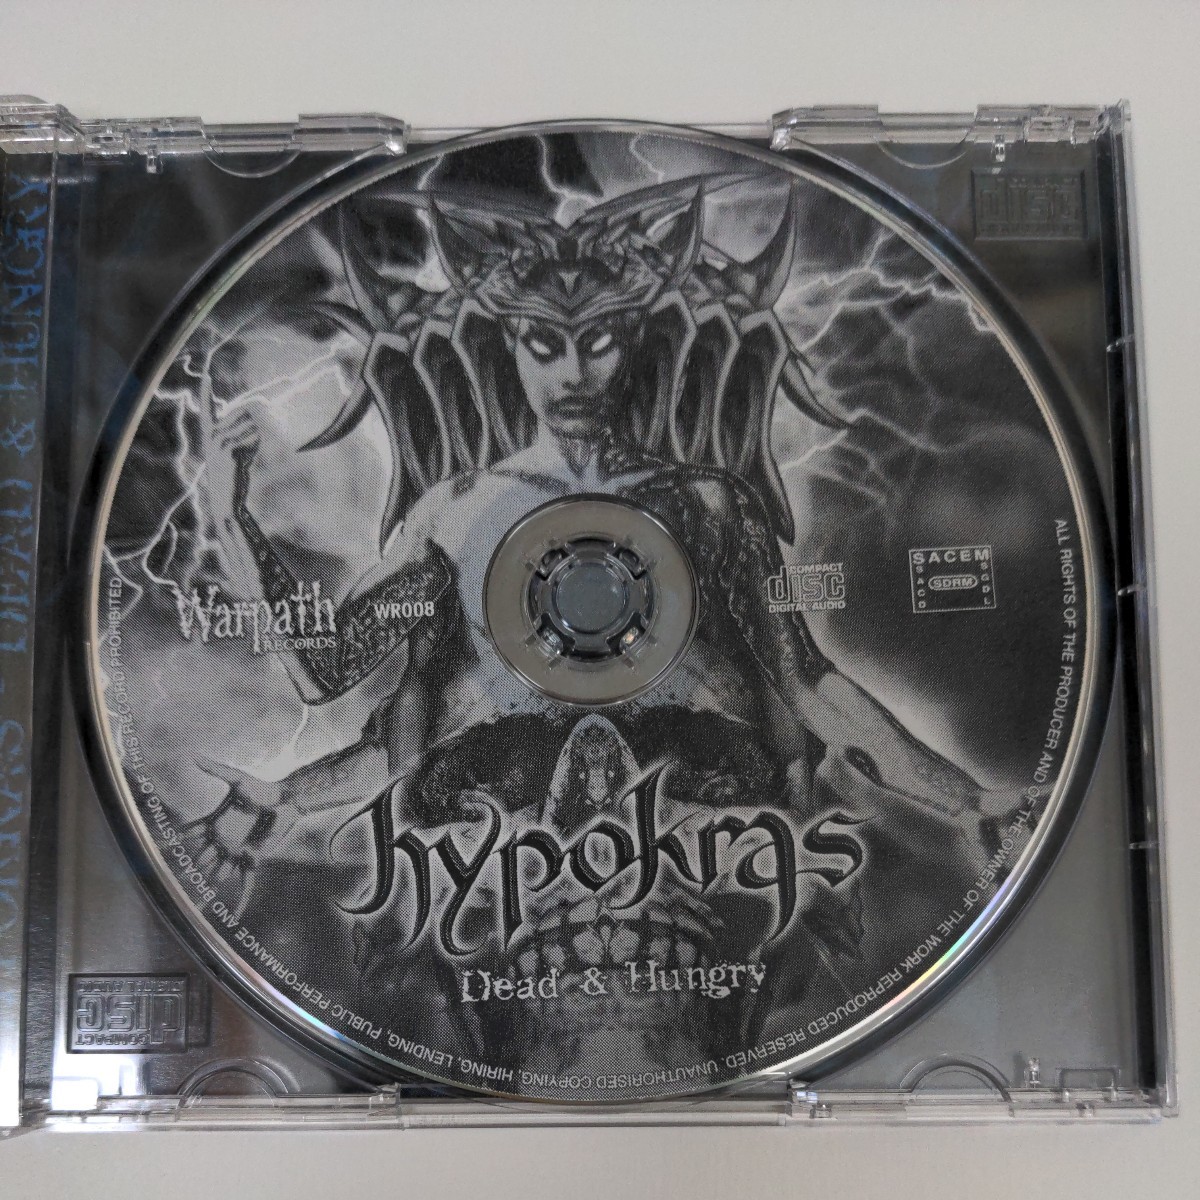 Hypokras France Death Thrash Heavy Metal デス・スラッシュメタル ヘヴィメタル 輸入盤CD 唯一作の画像5